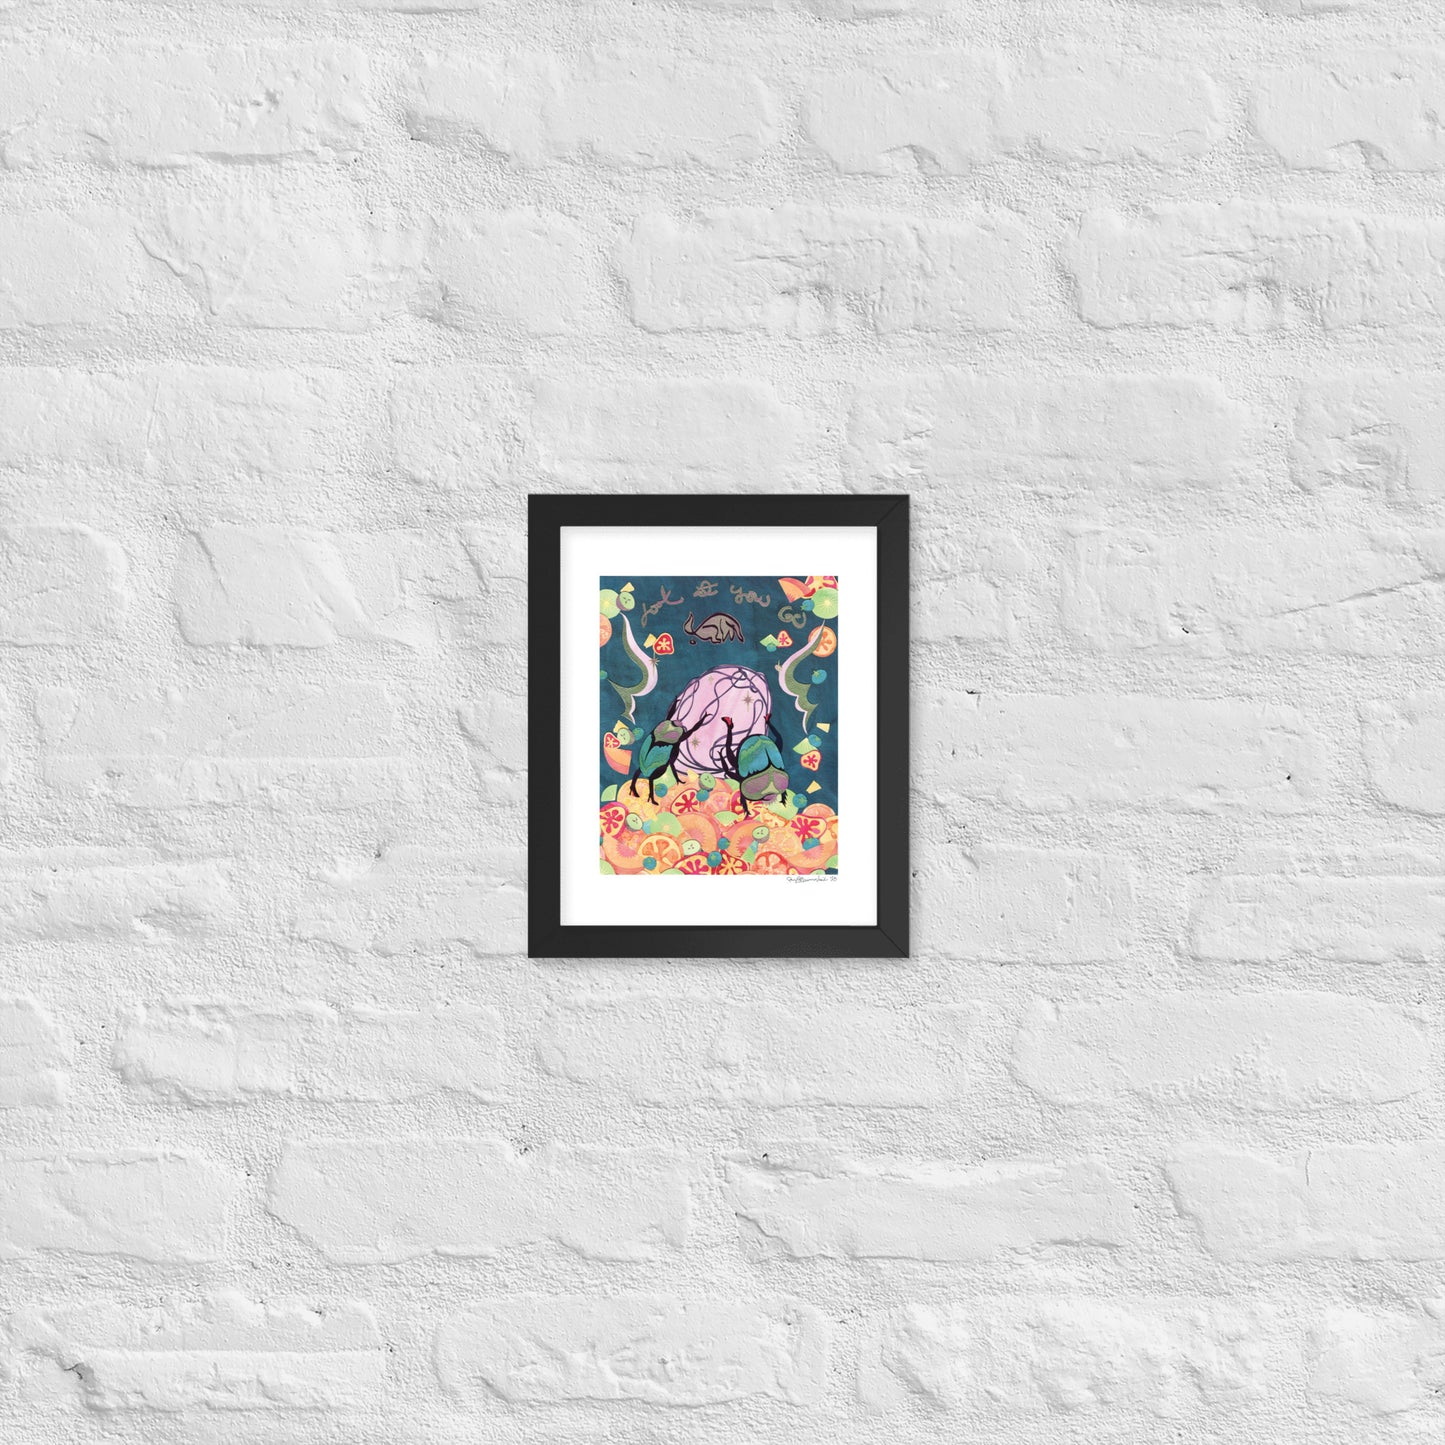 Look at You Go! - Framed Poster Print - Dung Beetle Art - Feminist Art